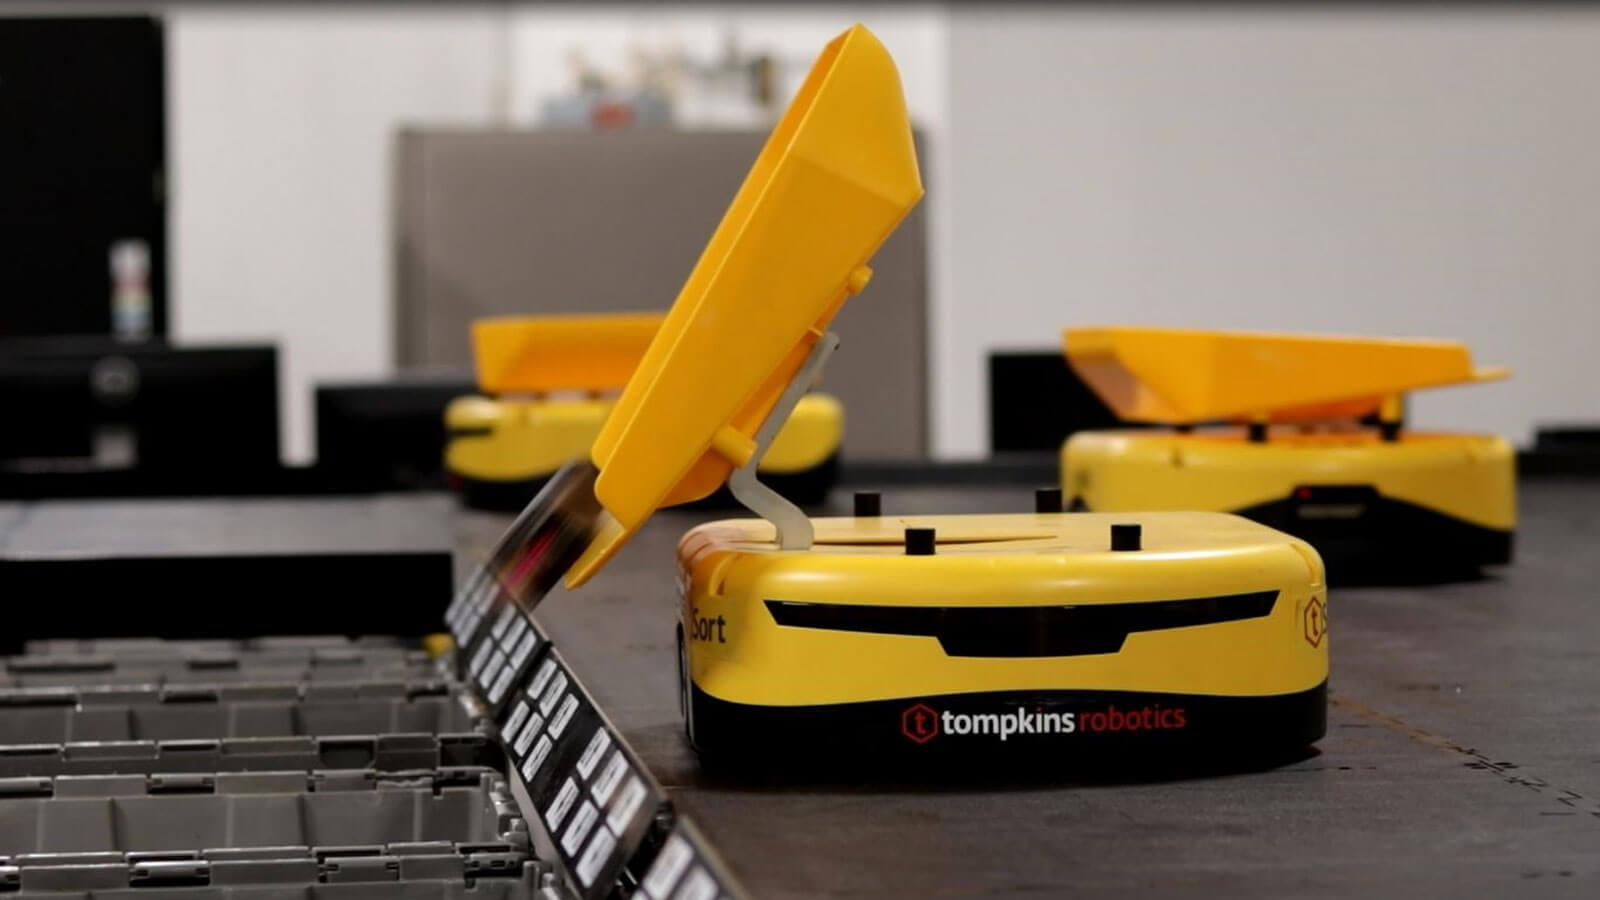 Tompkins tSort Robotic sortation technology